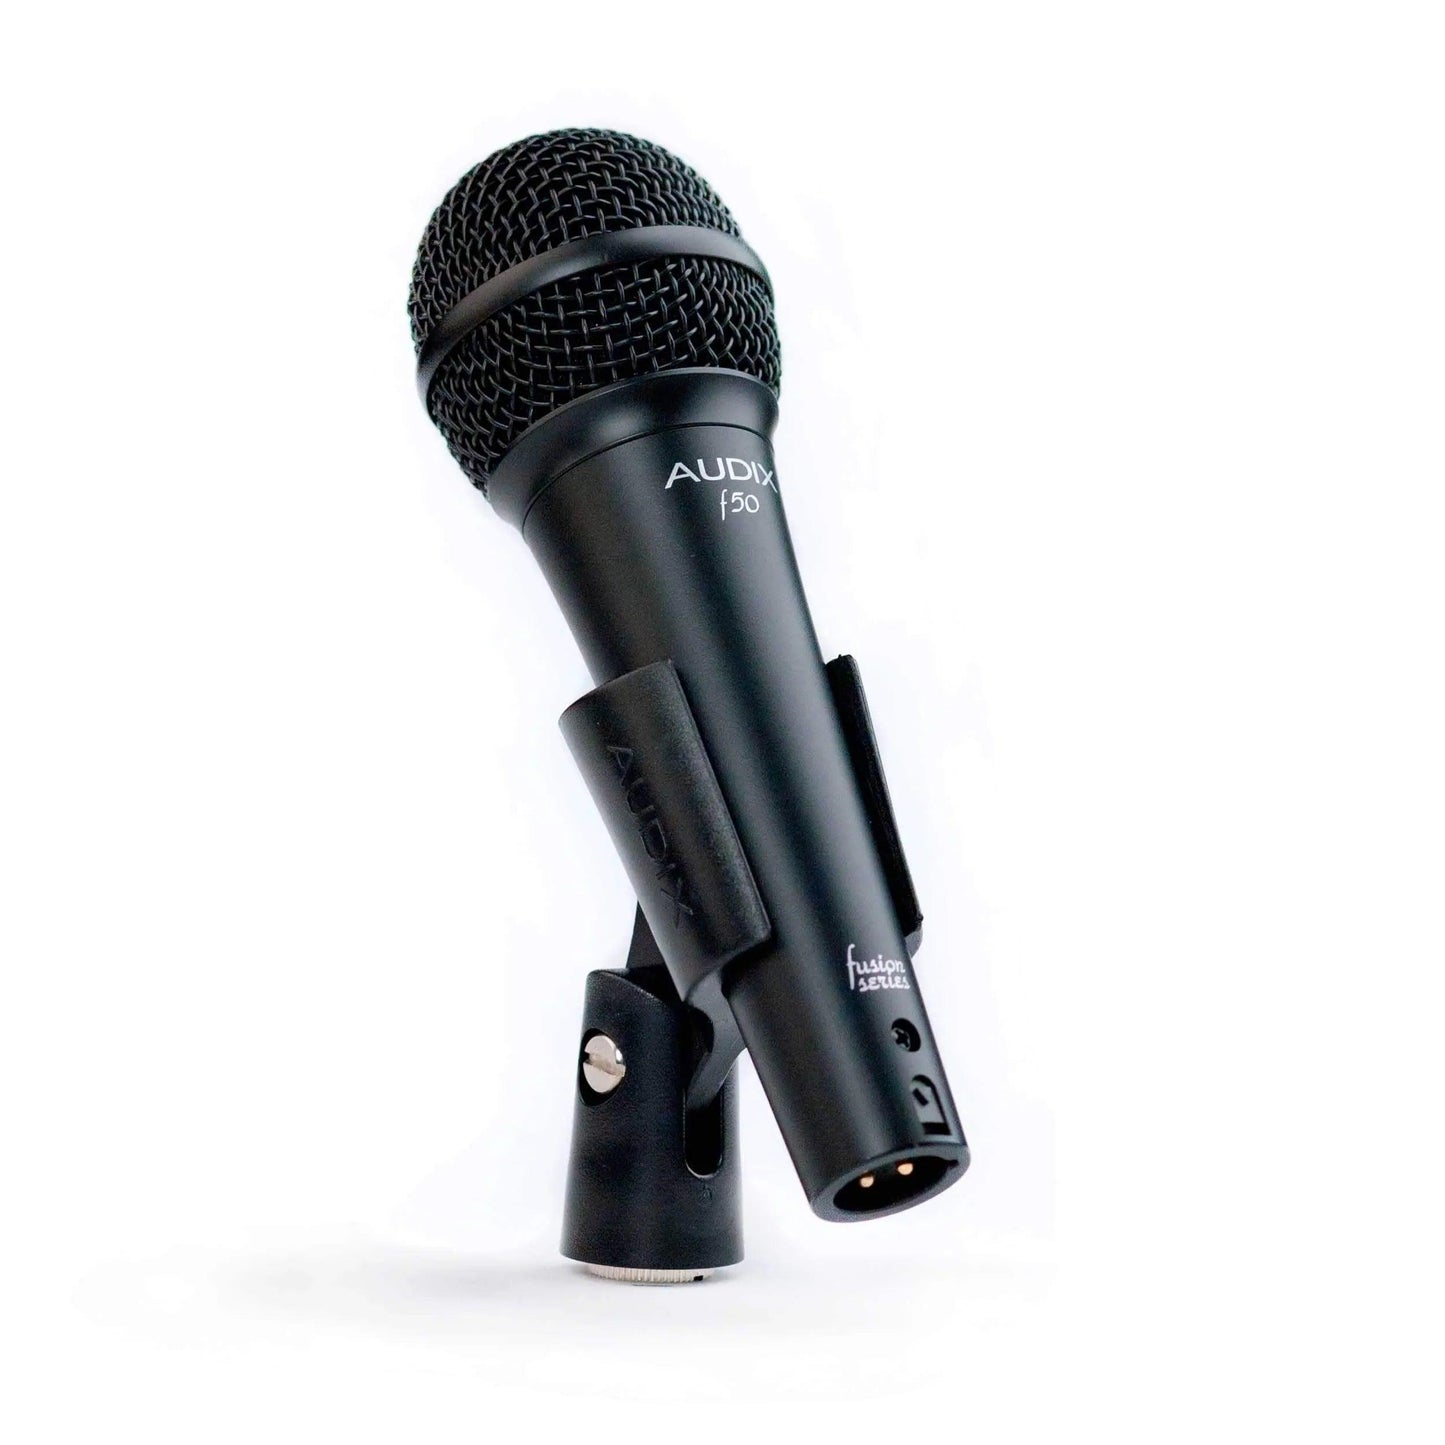 Audix F50 Dynamic Vocal Microphone